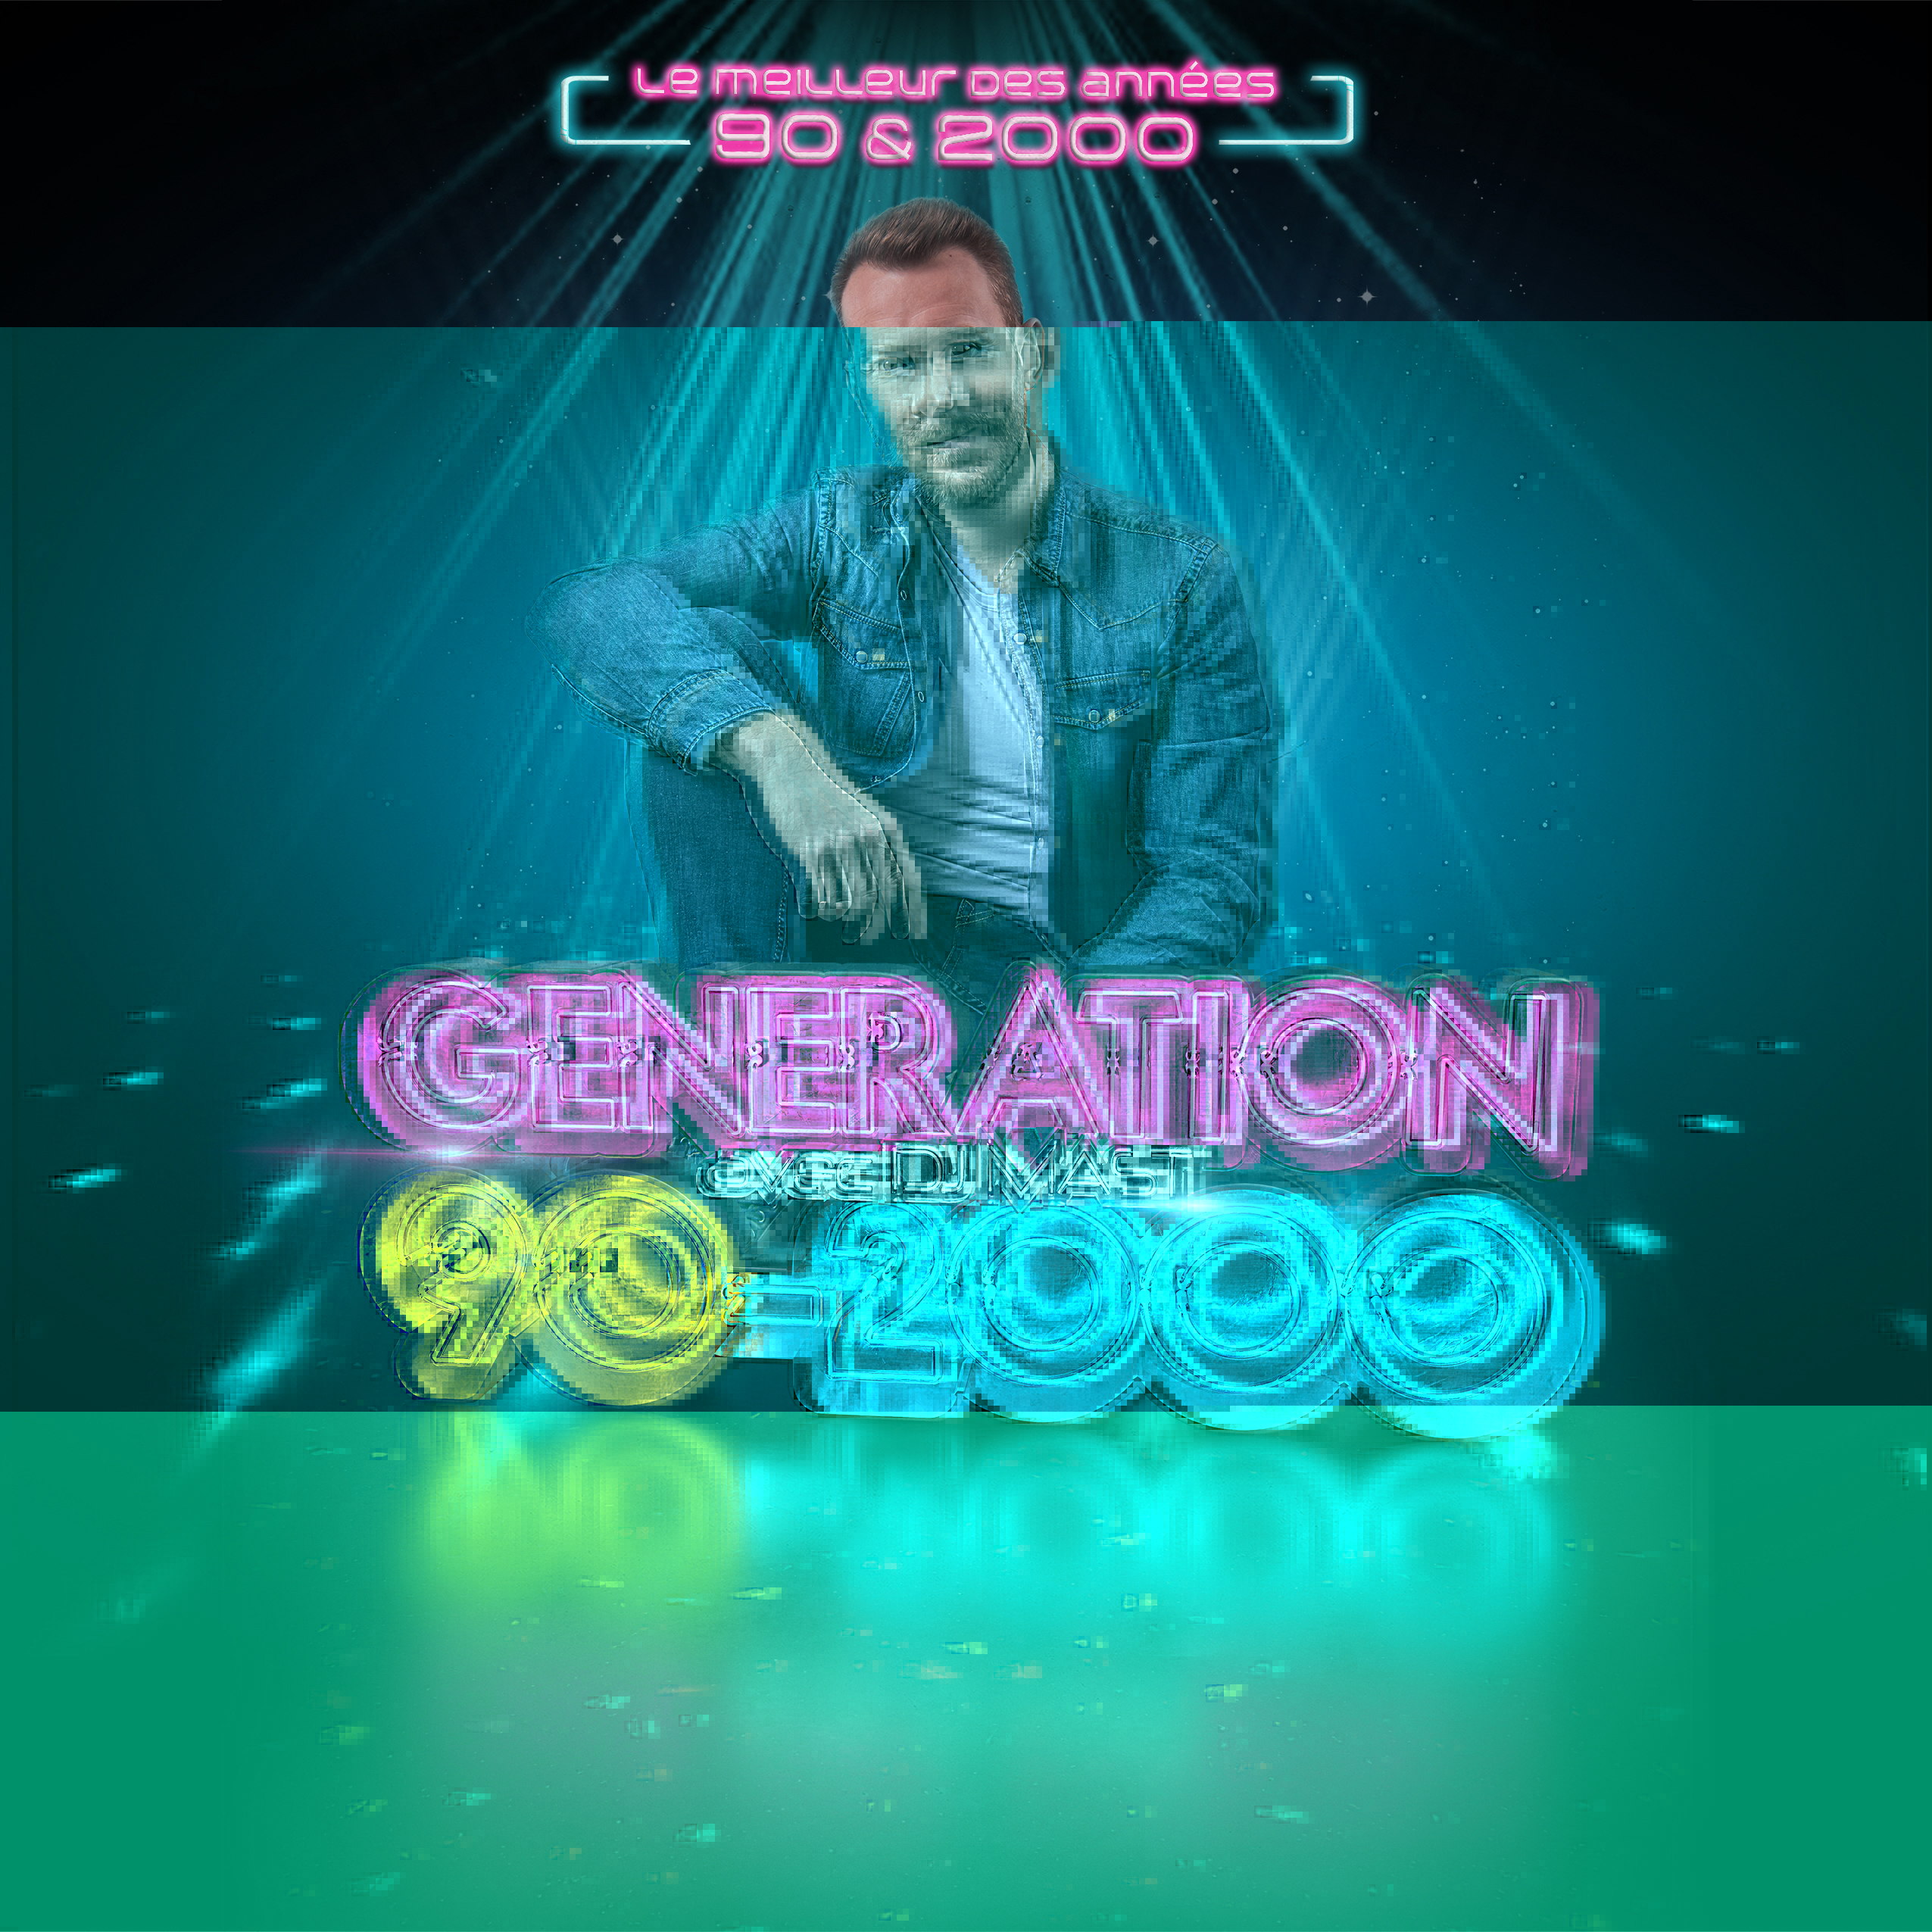 Generation 90-2000 DJ Mast